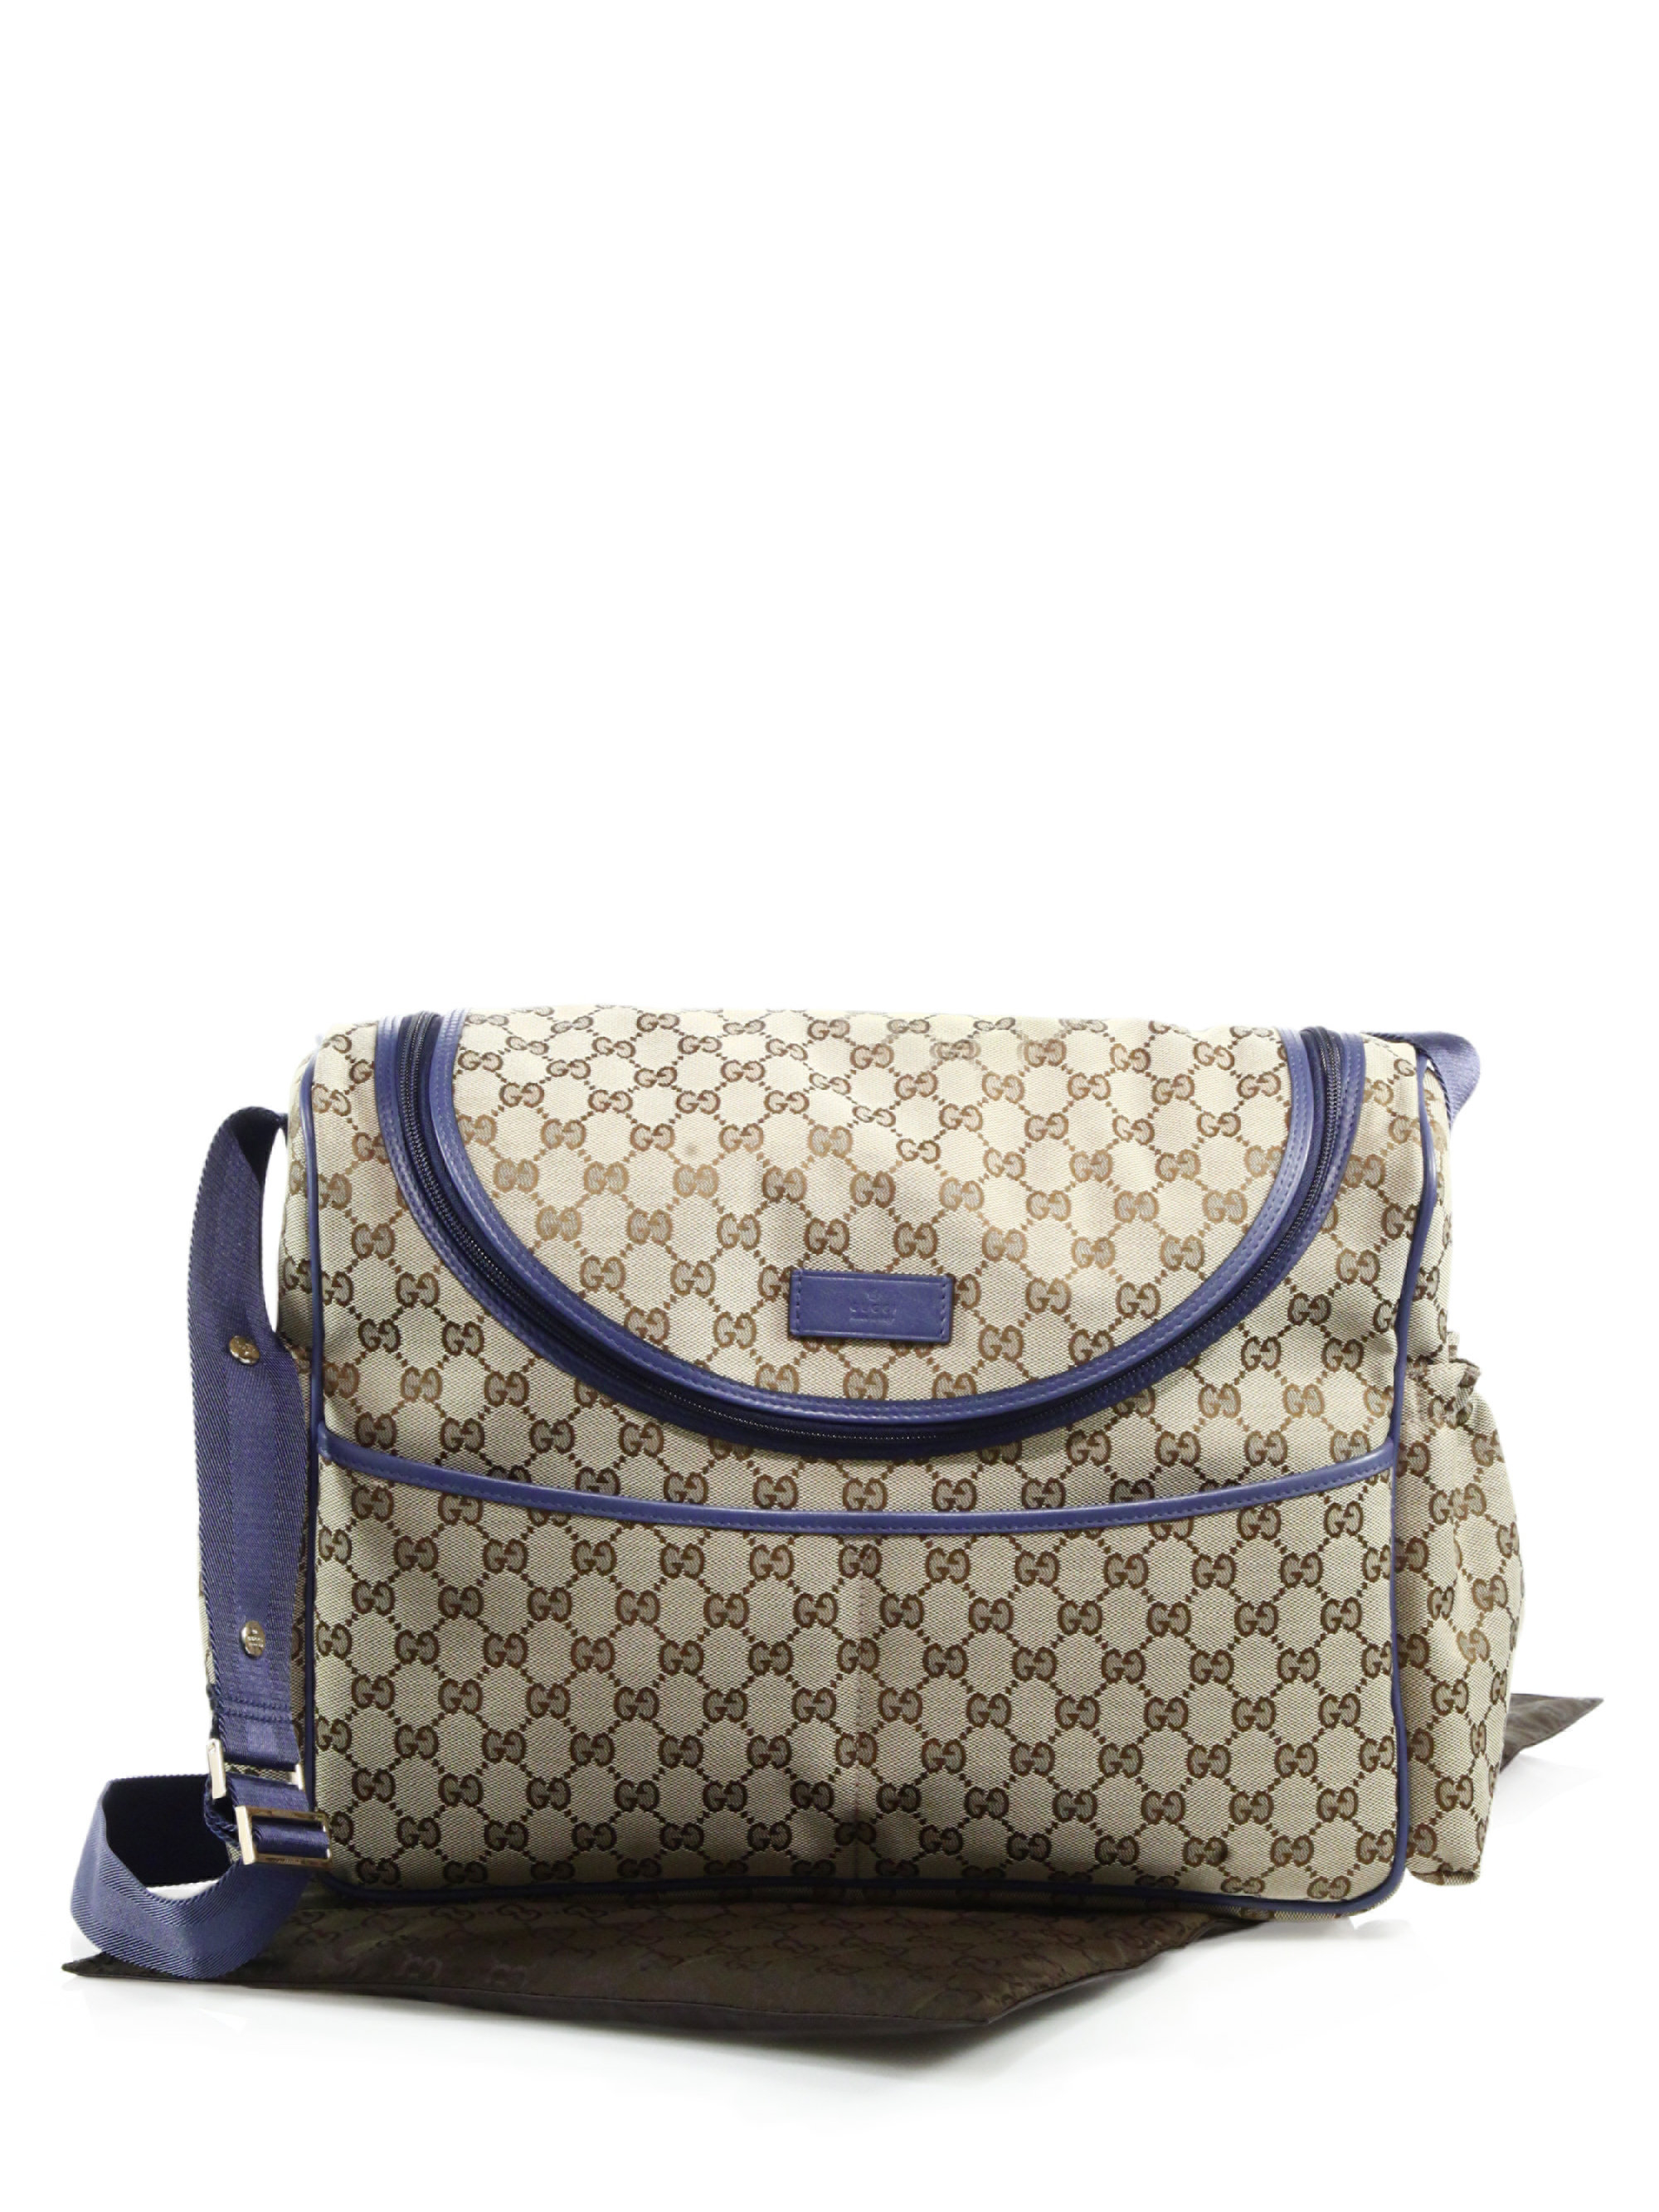 Lyst - Gucci Gg Supreme Canvas Diaper Bag in Blue